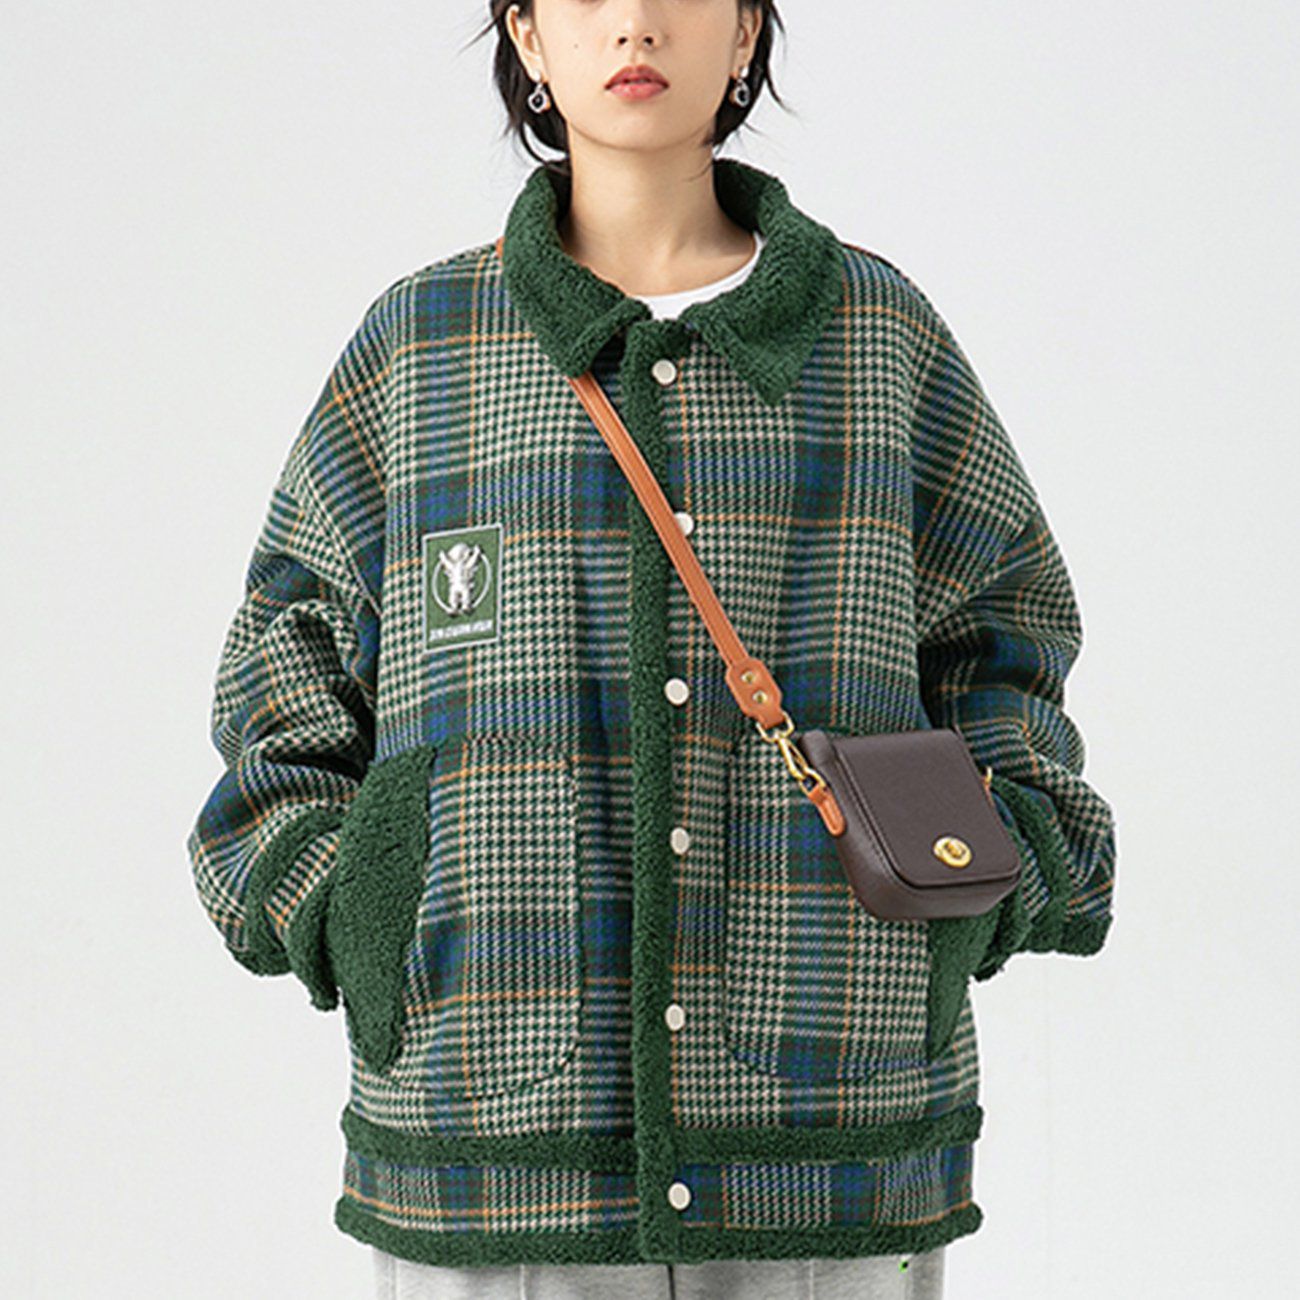 Majesda® - Plaid Sherpa Winter Coat outfit ideas streetwear fashion